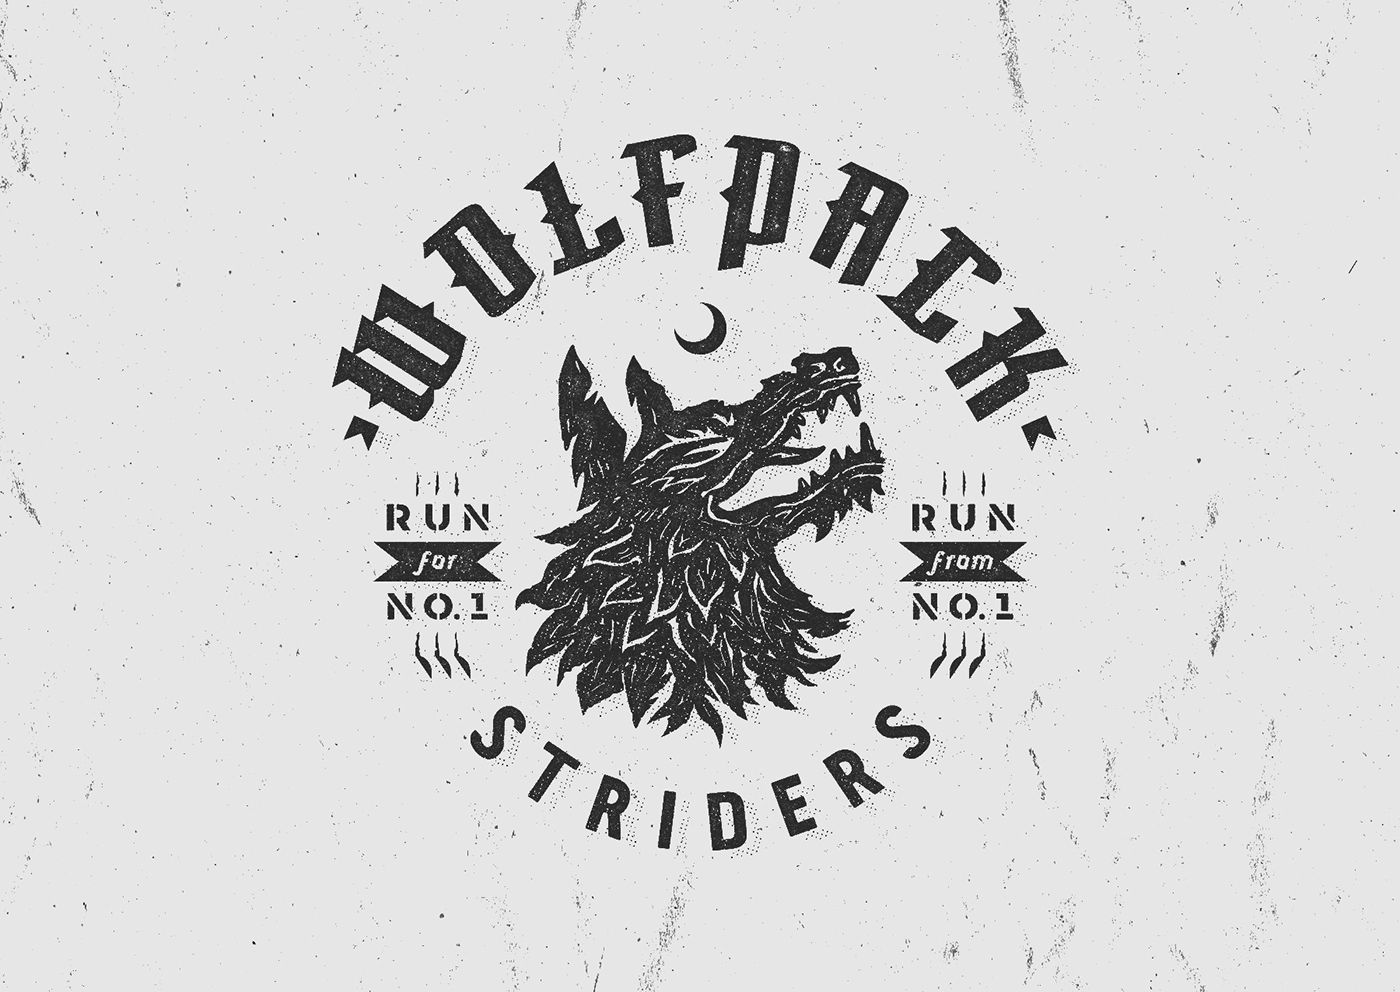 wolf wolves Striders run runners train Nike club black dark gang apparel athletic race comite